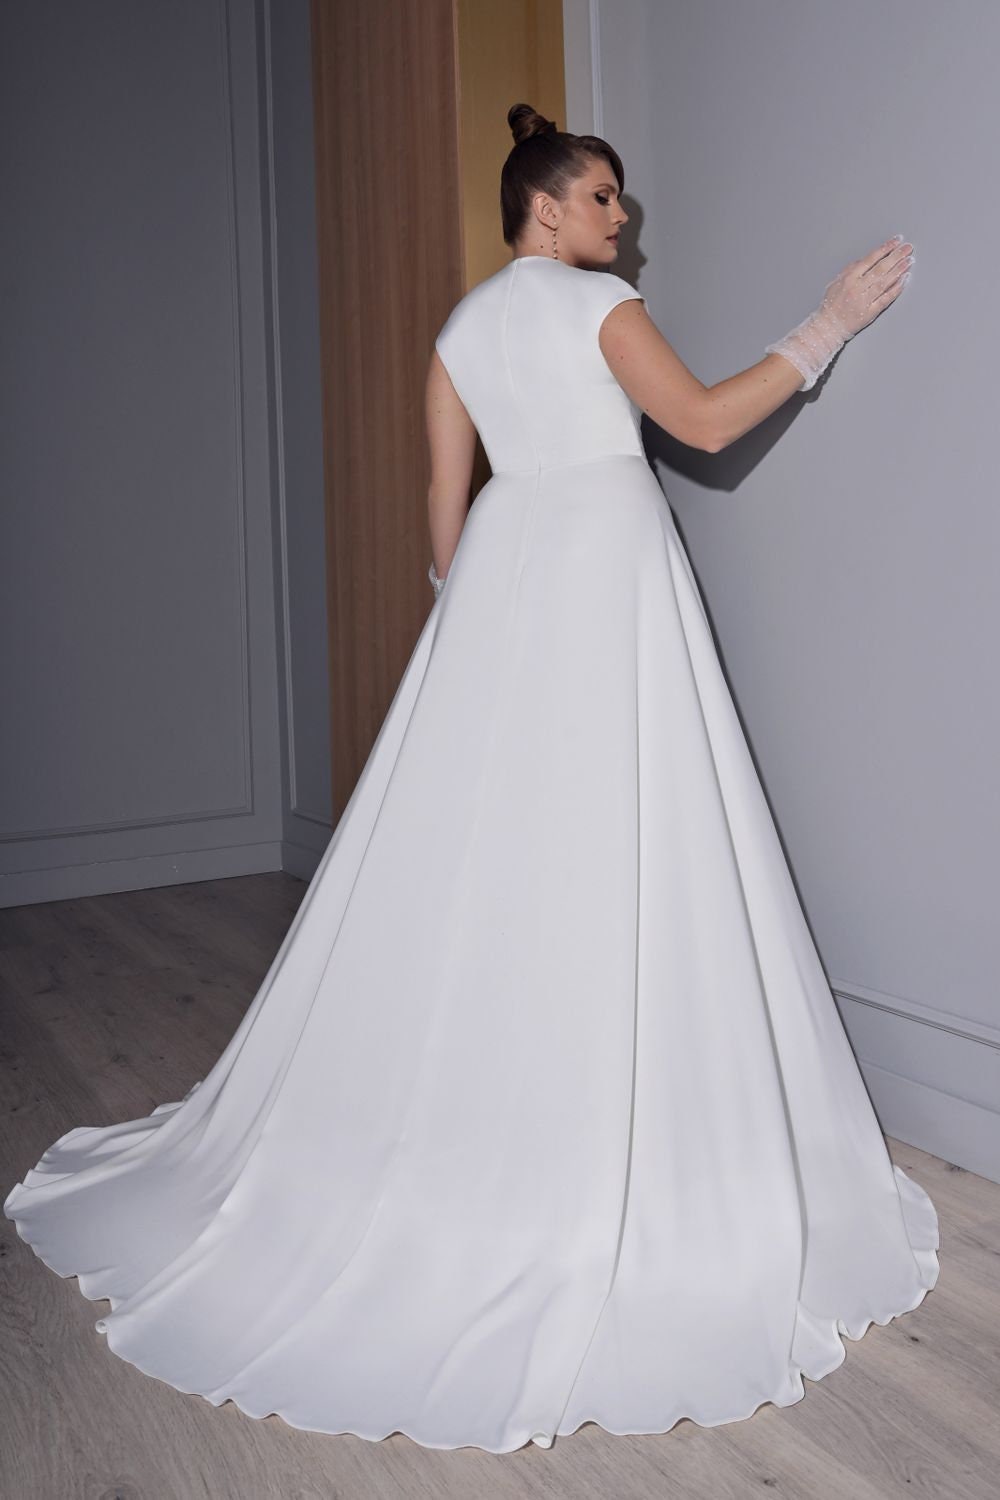 Simple Minimalist V Neckline Aline Silk Satin Wedding Dress Bridal Gown Classic Design Modest LDS Style Short Cap Sleeves Covered Back Train